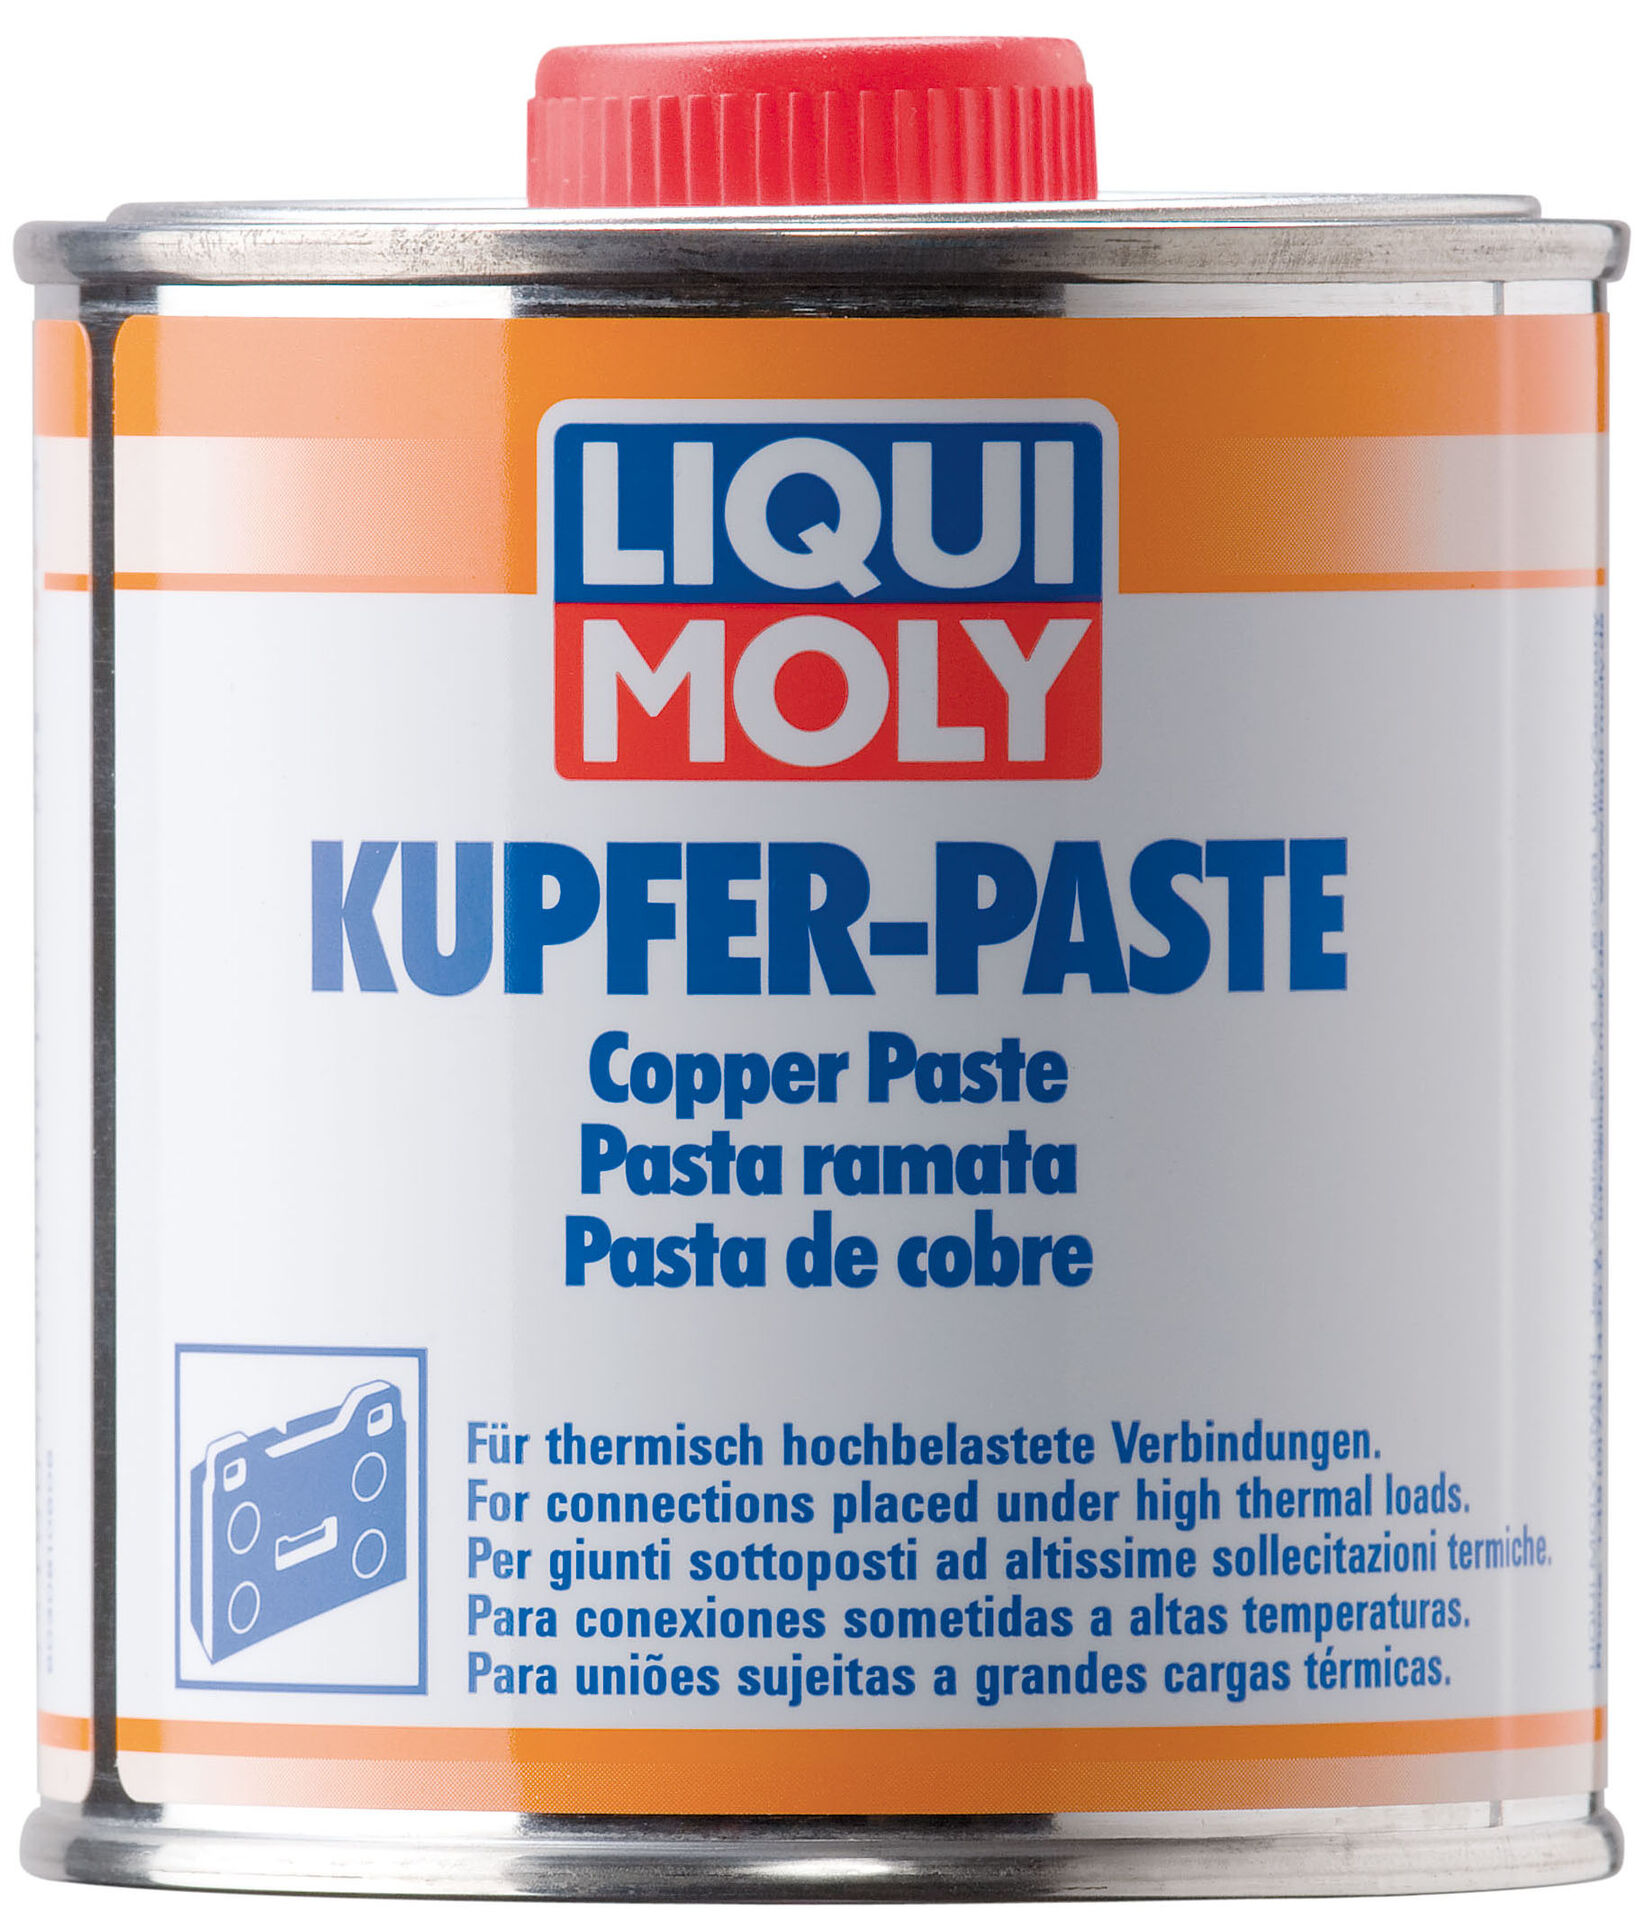 Liqui Moly Kupferpaste Copper Paste Schmiermittel Korrosionsschutz 250g